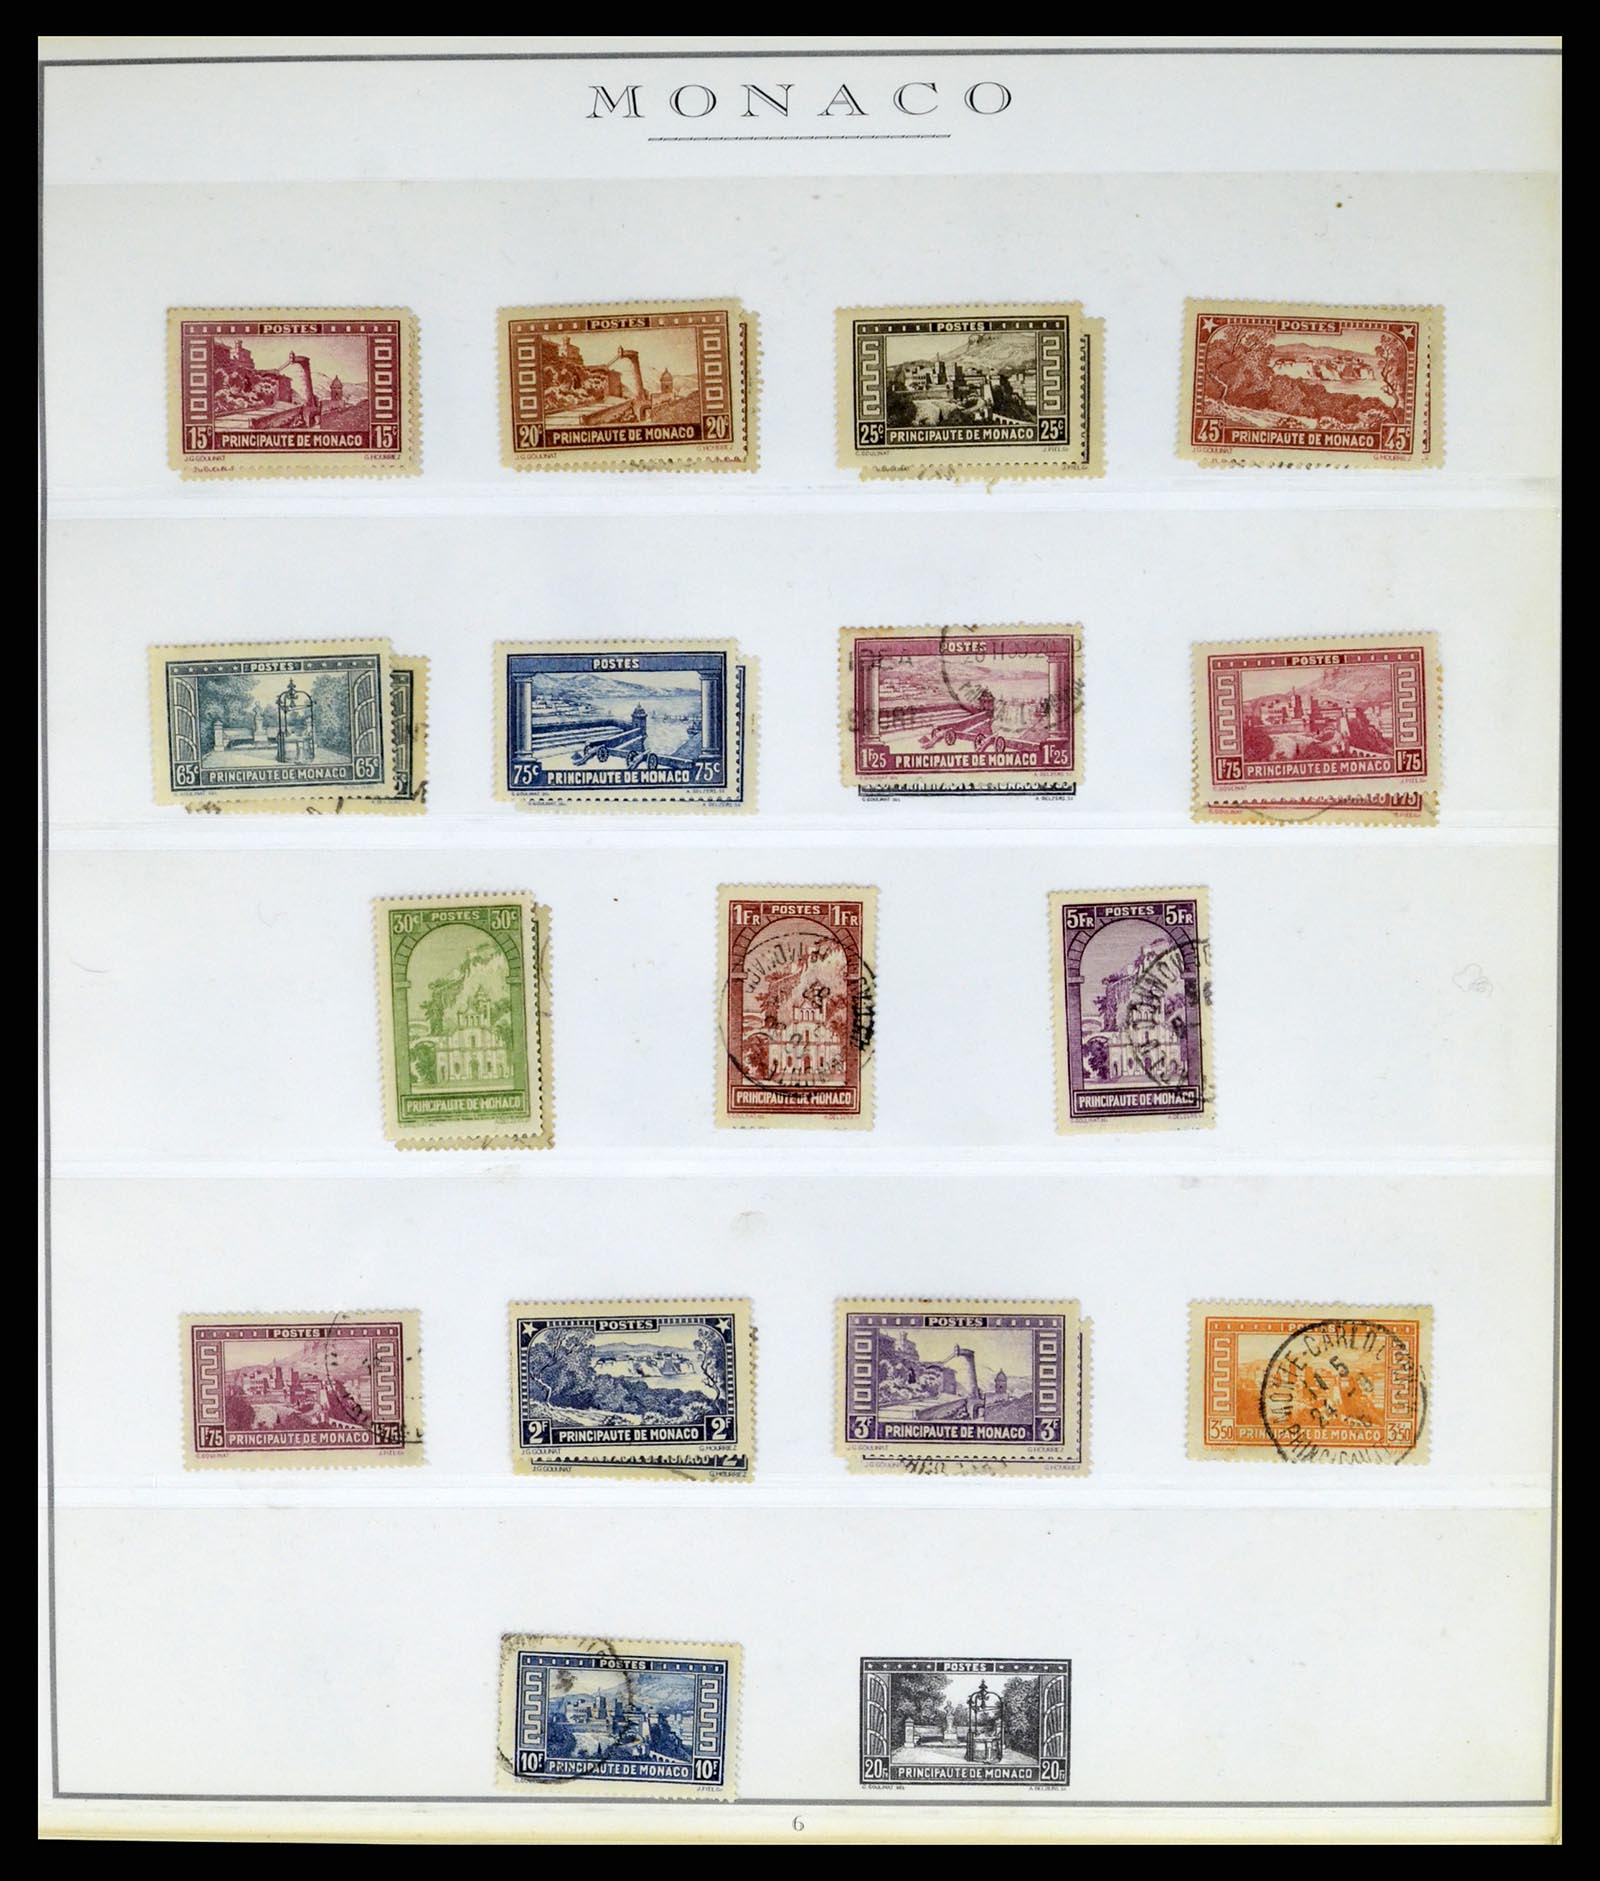 37437 011 - Stamp collection 37437 Monaco 1885-1996.